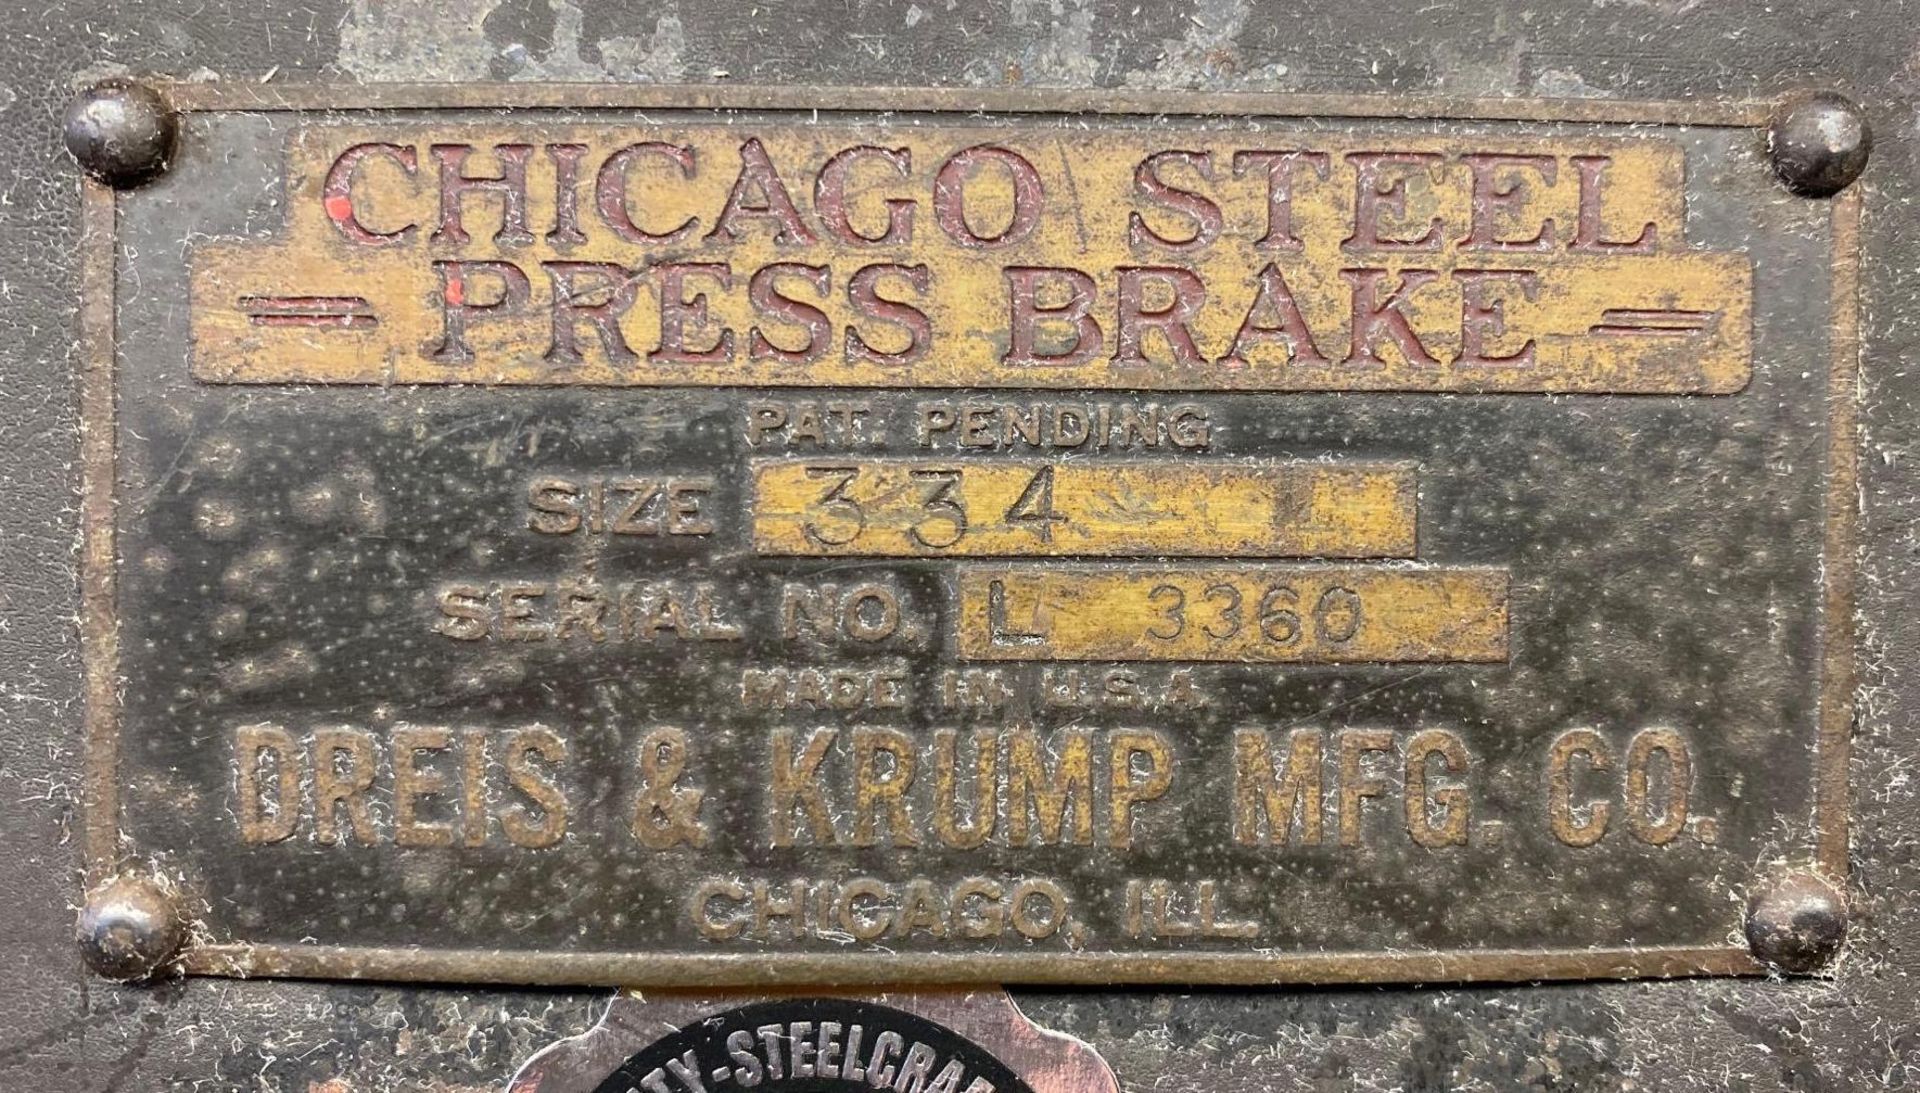 5’ Chicago Dries & Krump 334 Press Brake - Image 5 of 8